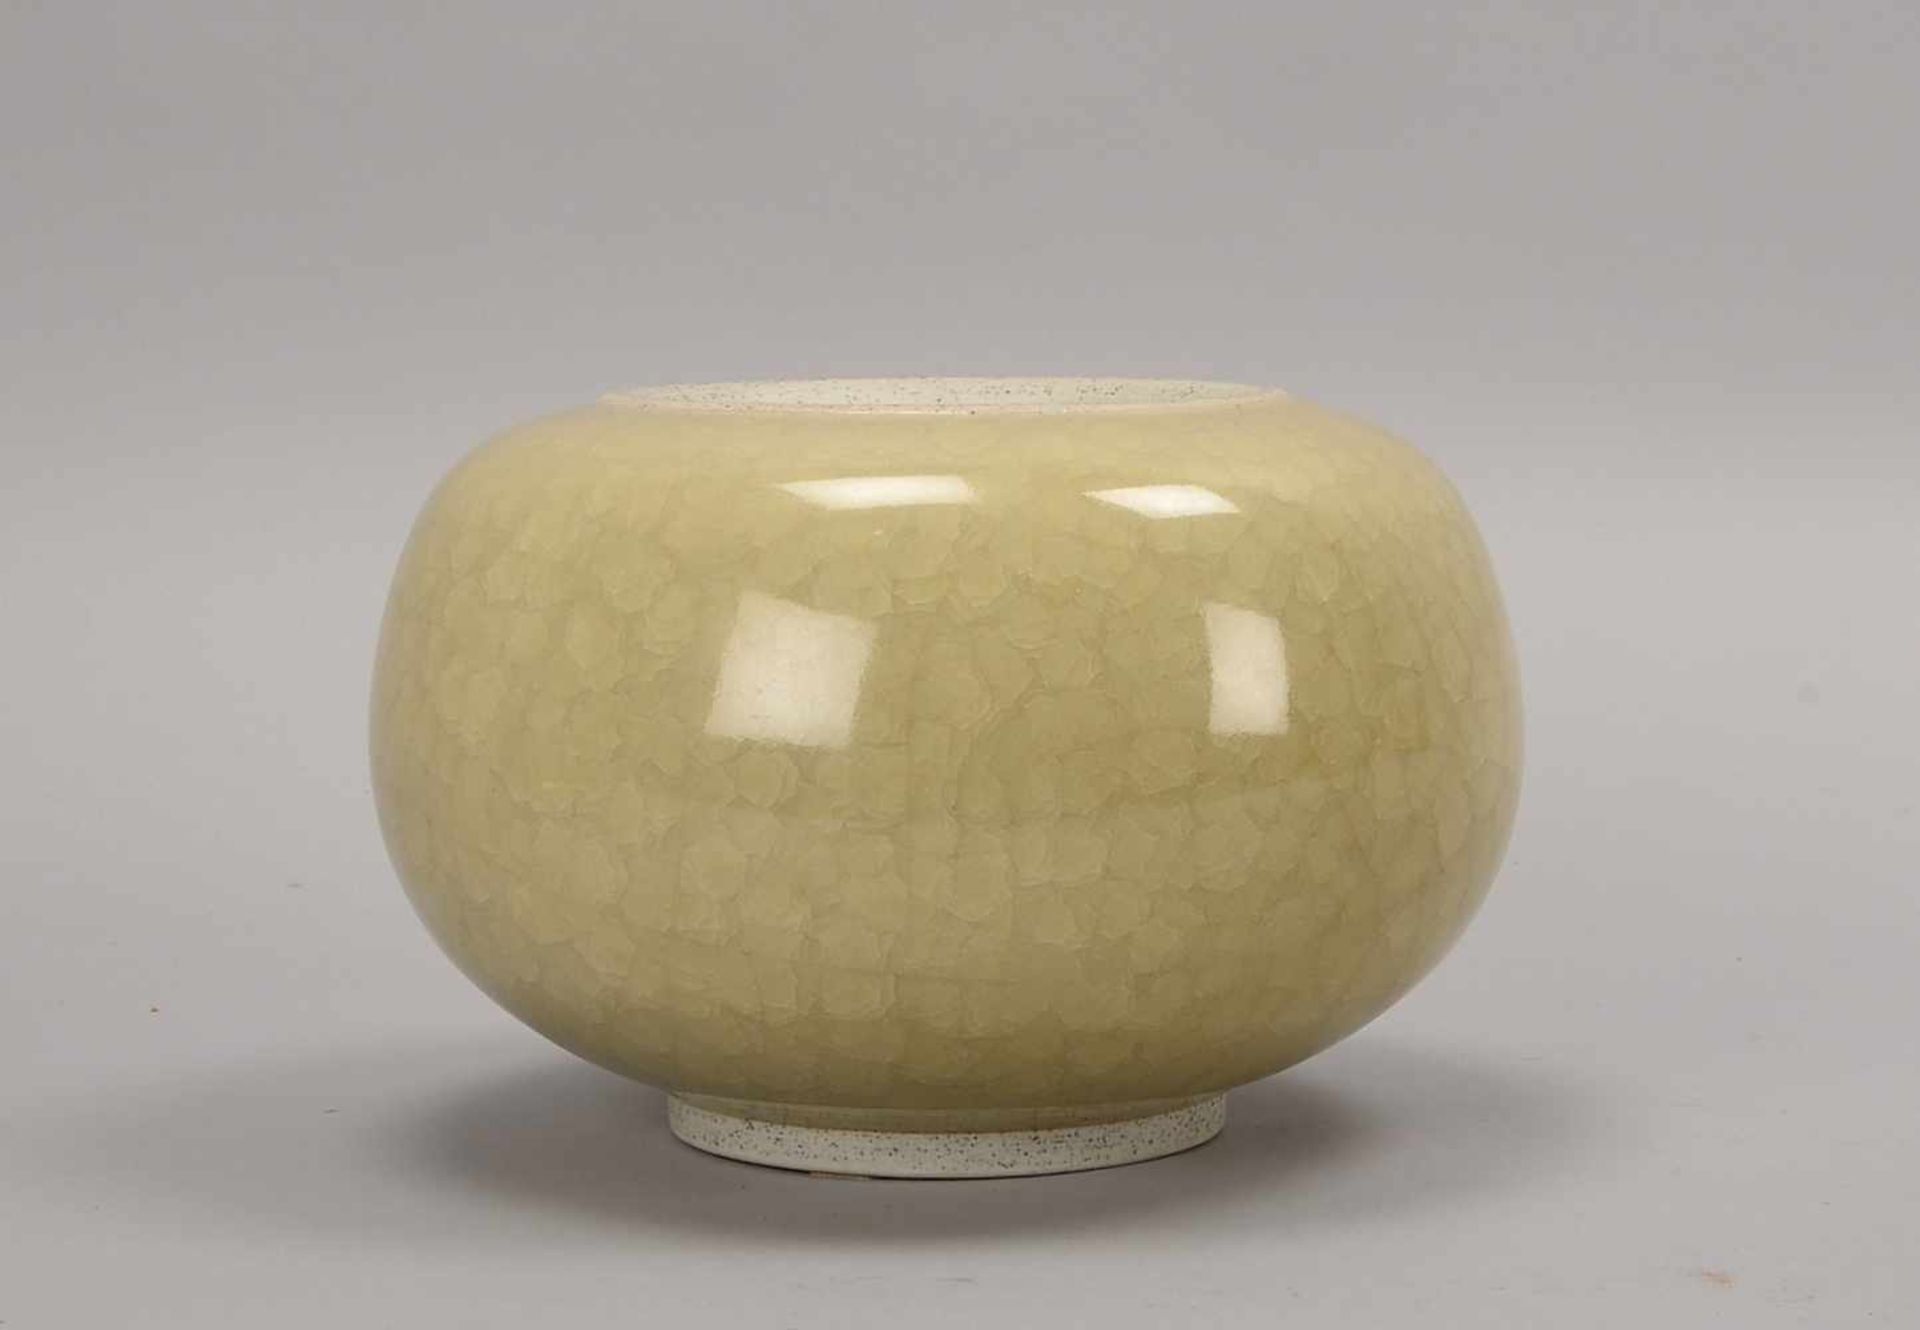 Sengle, Guido (*1956 Marburg), Keramik-Kugelvase (schwere Ausführung), abgeplattete Form, heller